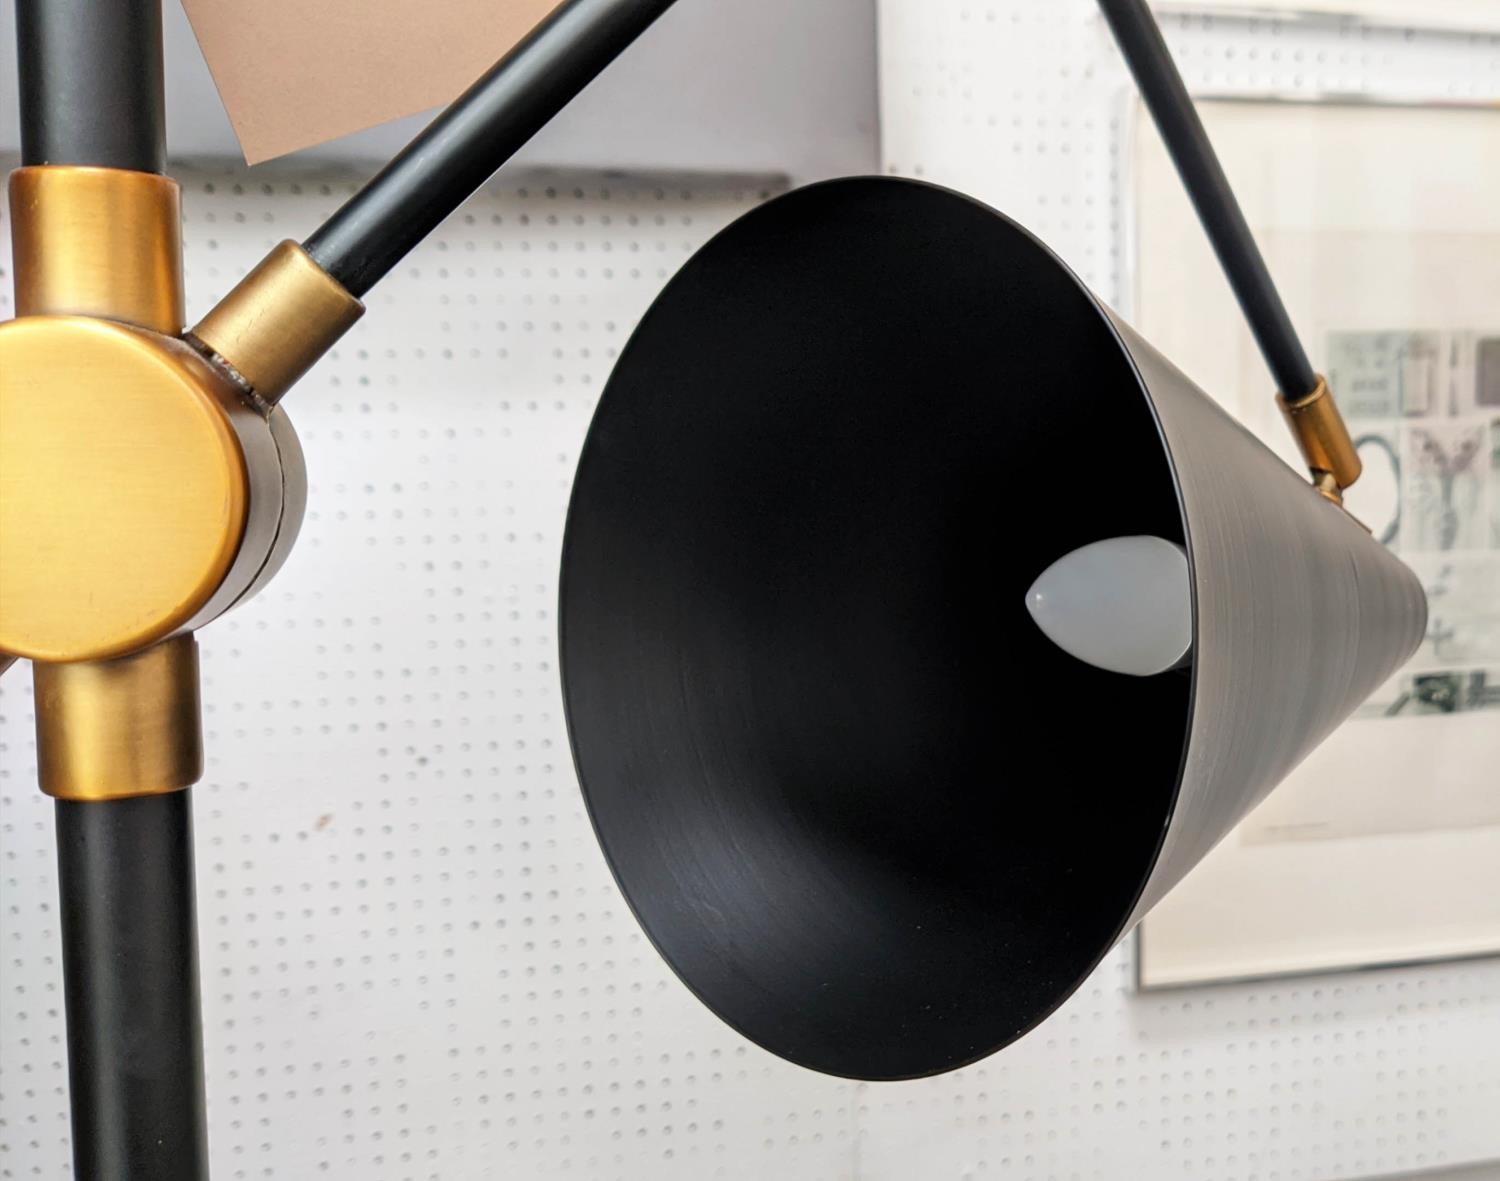 FLOOR LAMP, twin head design, 1950's Italian style, 181cm h. - Image 2 of 5